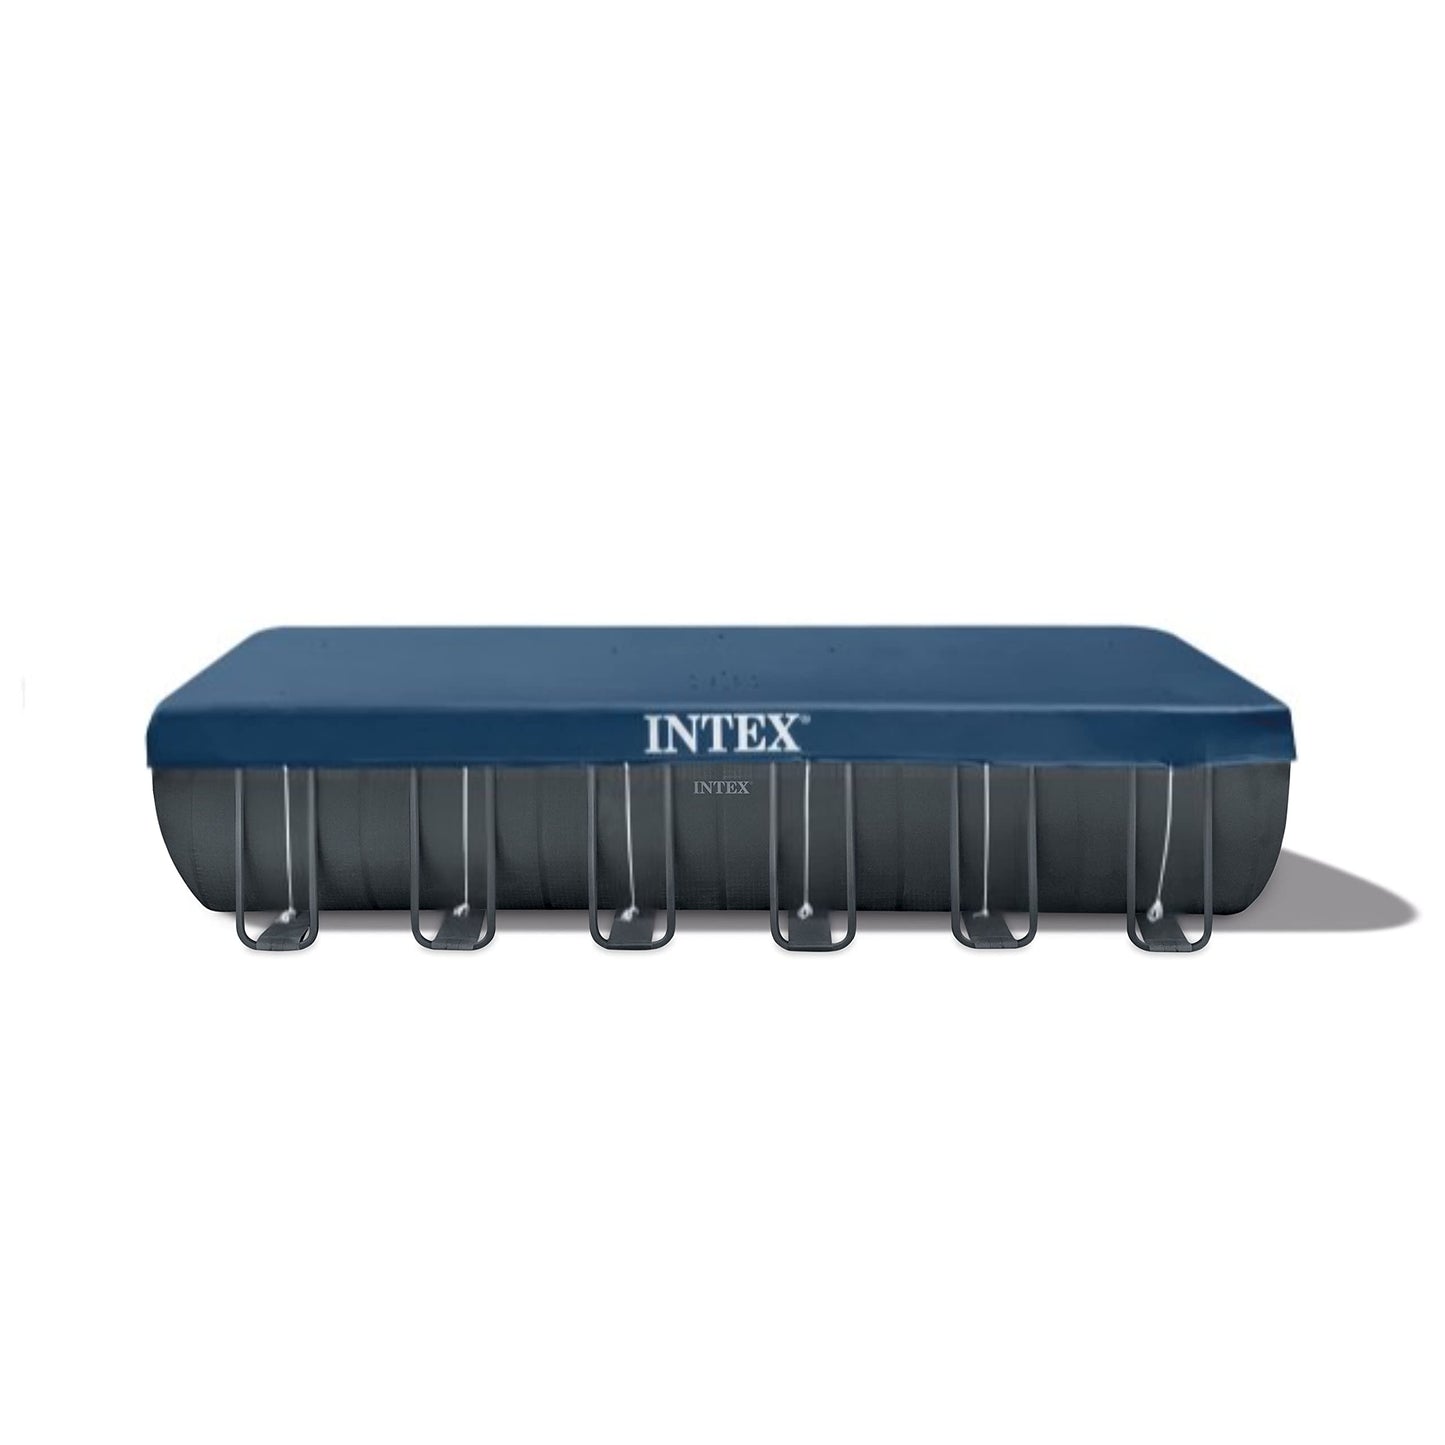 INTEX 18ftx9ftx52 in Rectangular